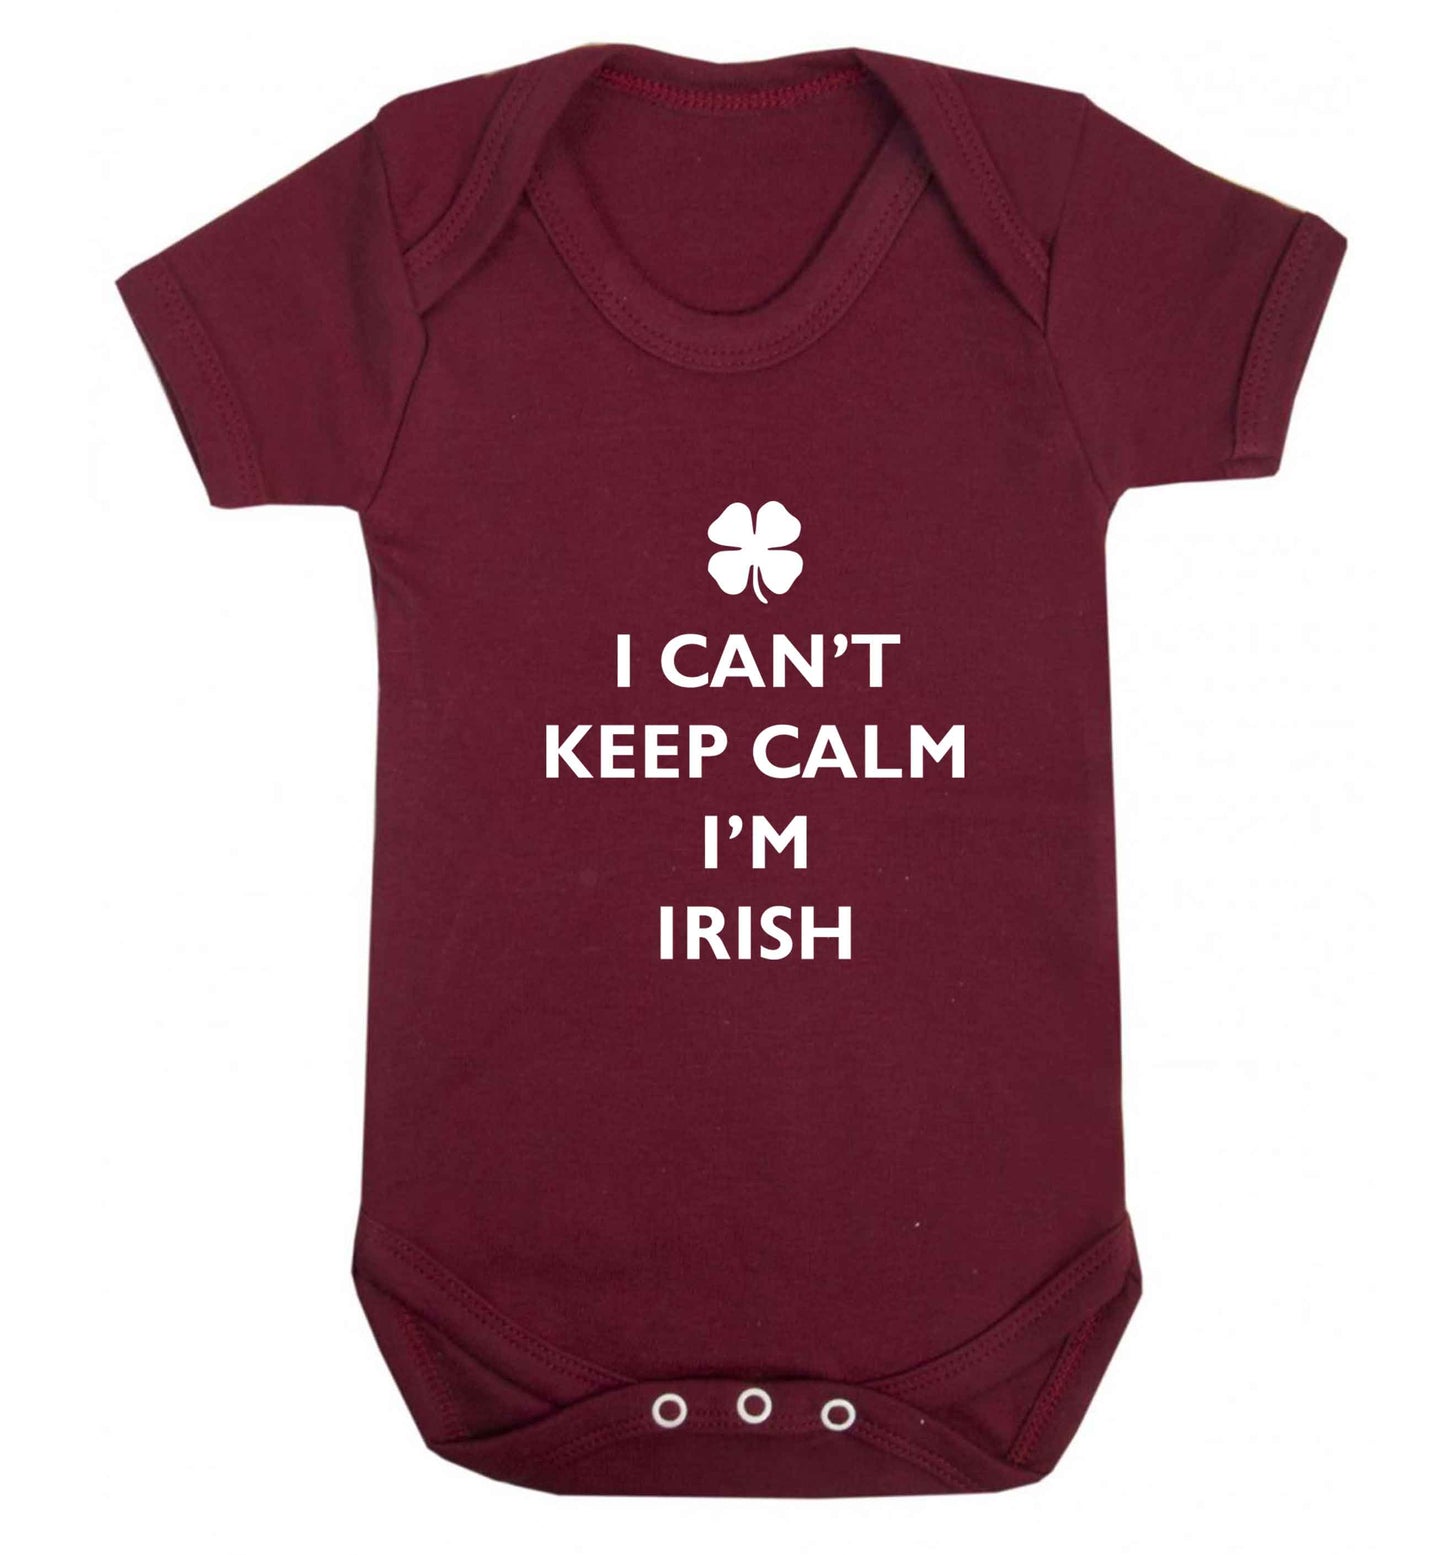 I can't keep calm I'm Irish baby vest maroon 18-24 months